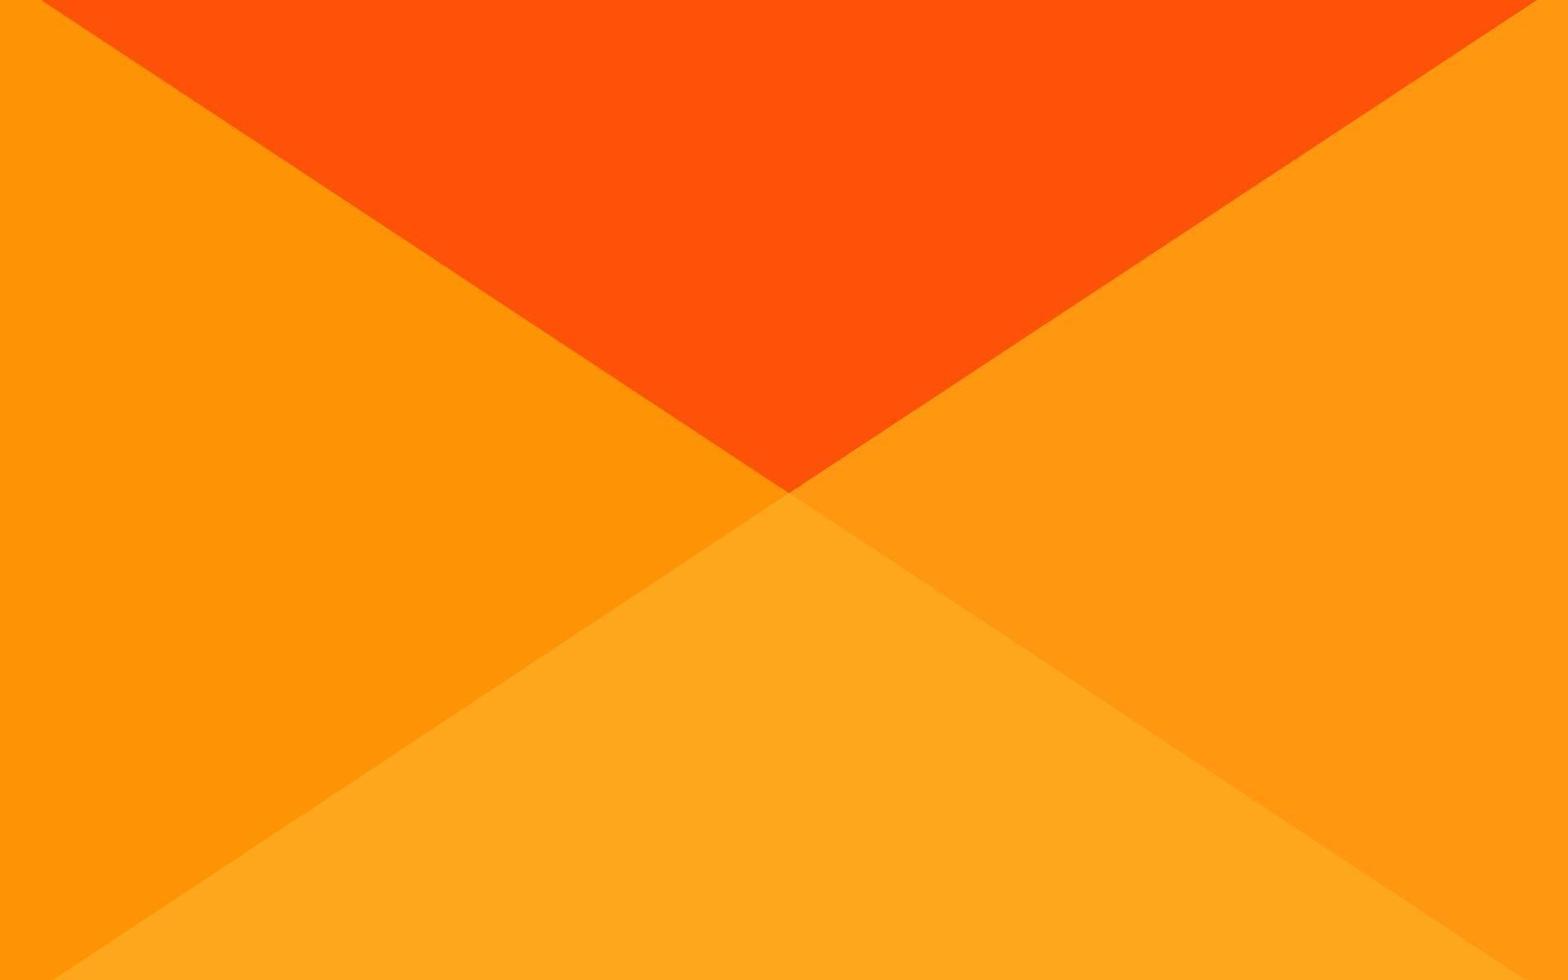 layout poligonal abstrato de vetor amarelo e laranja claro.